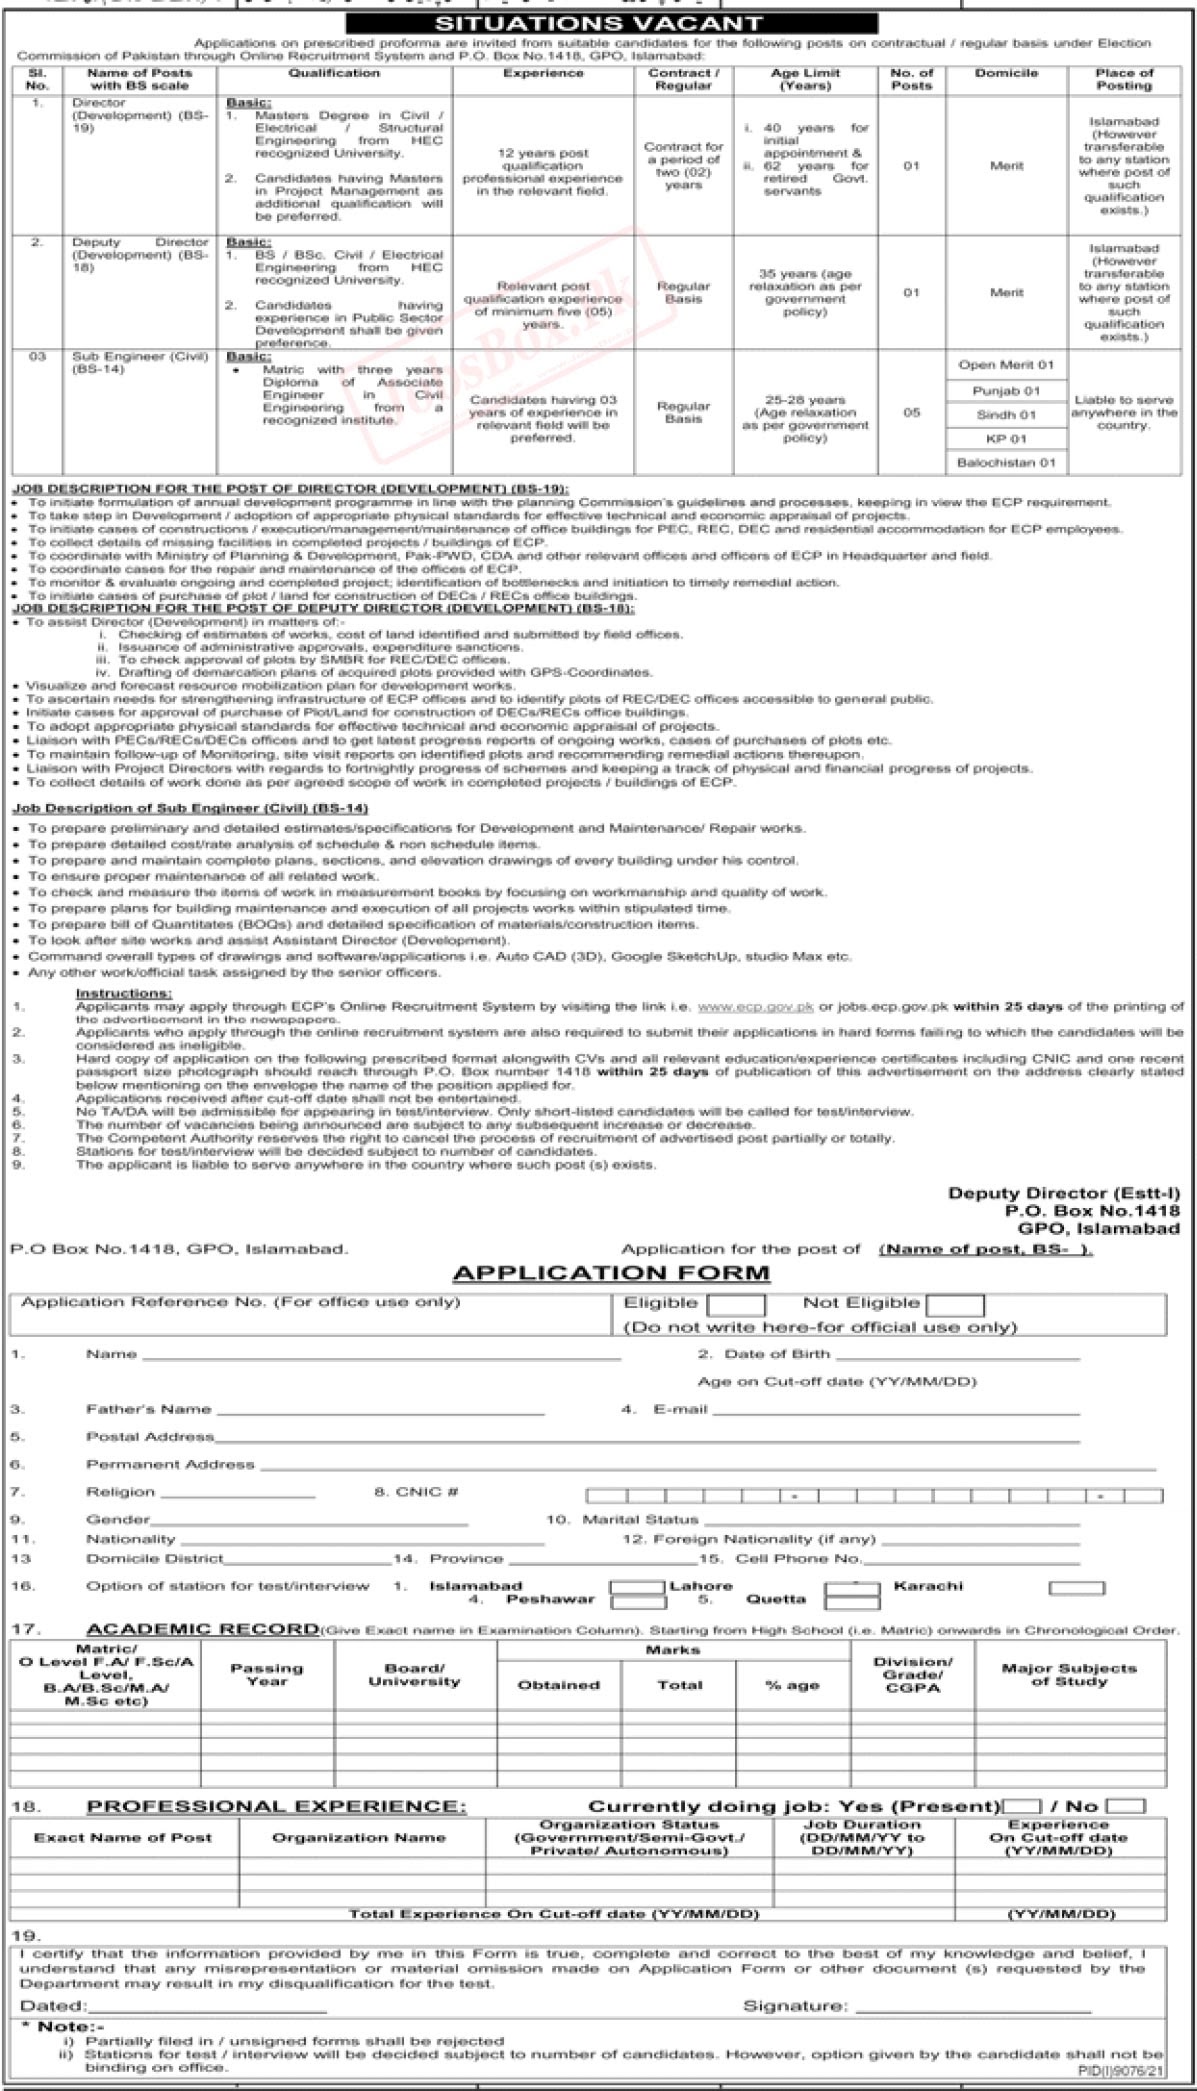 www.jobs.ecp.gov.pk Jobs 2022 - ECP Jobs 2022 - ECPS Careers - ECP Online Recruitment - Jobs in ECP 2022 - Election Commission of Pakistan Jobs 2022